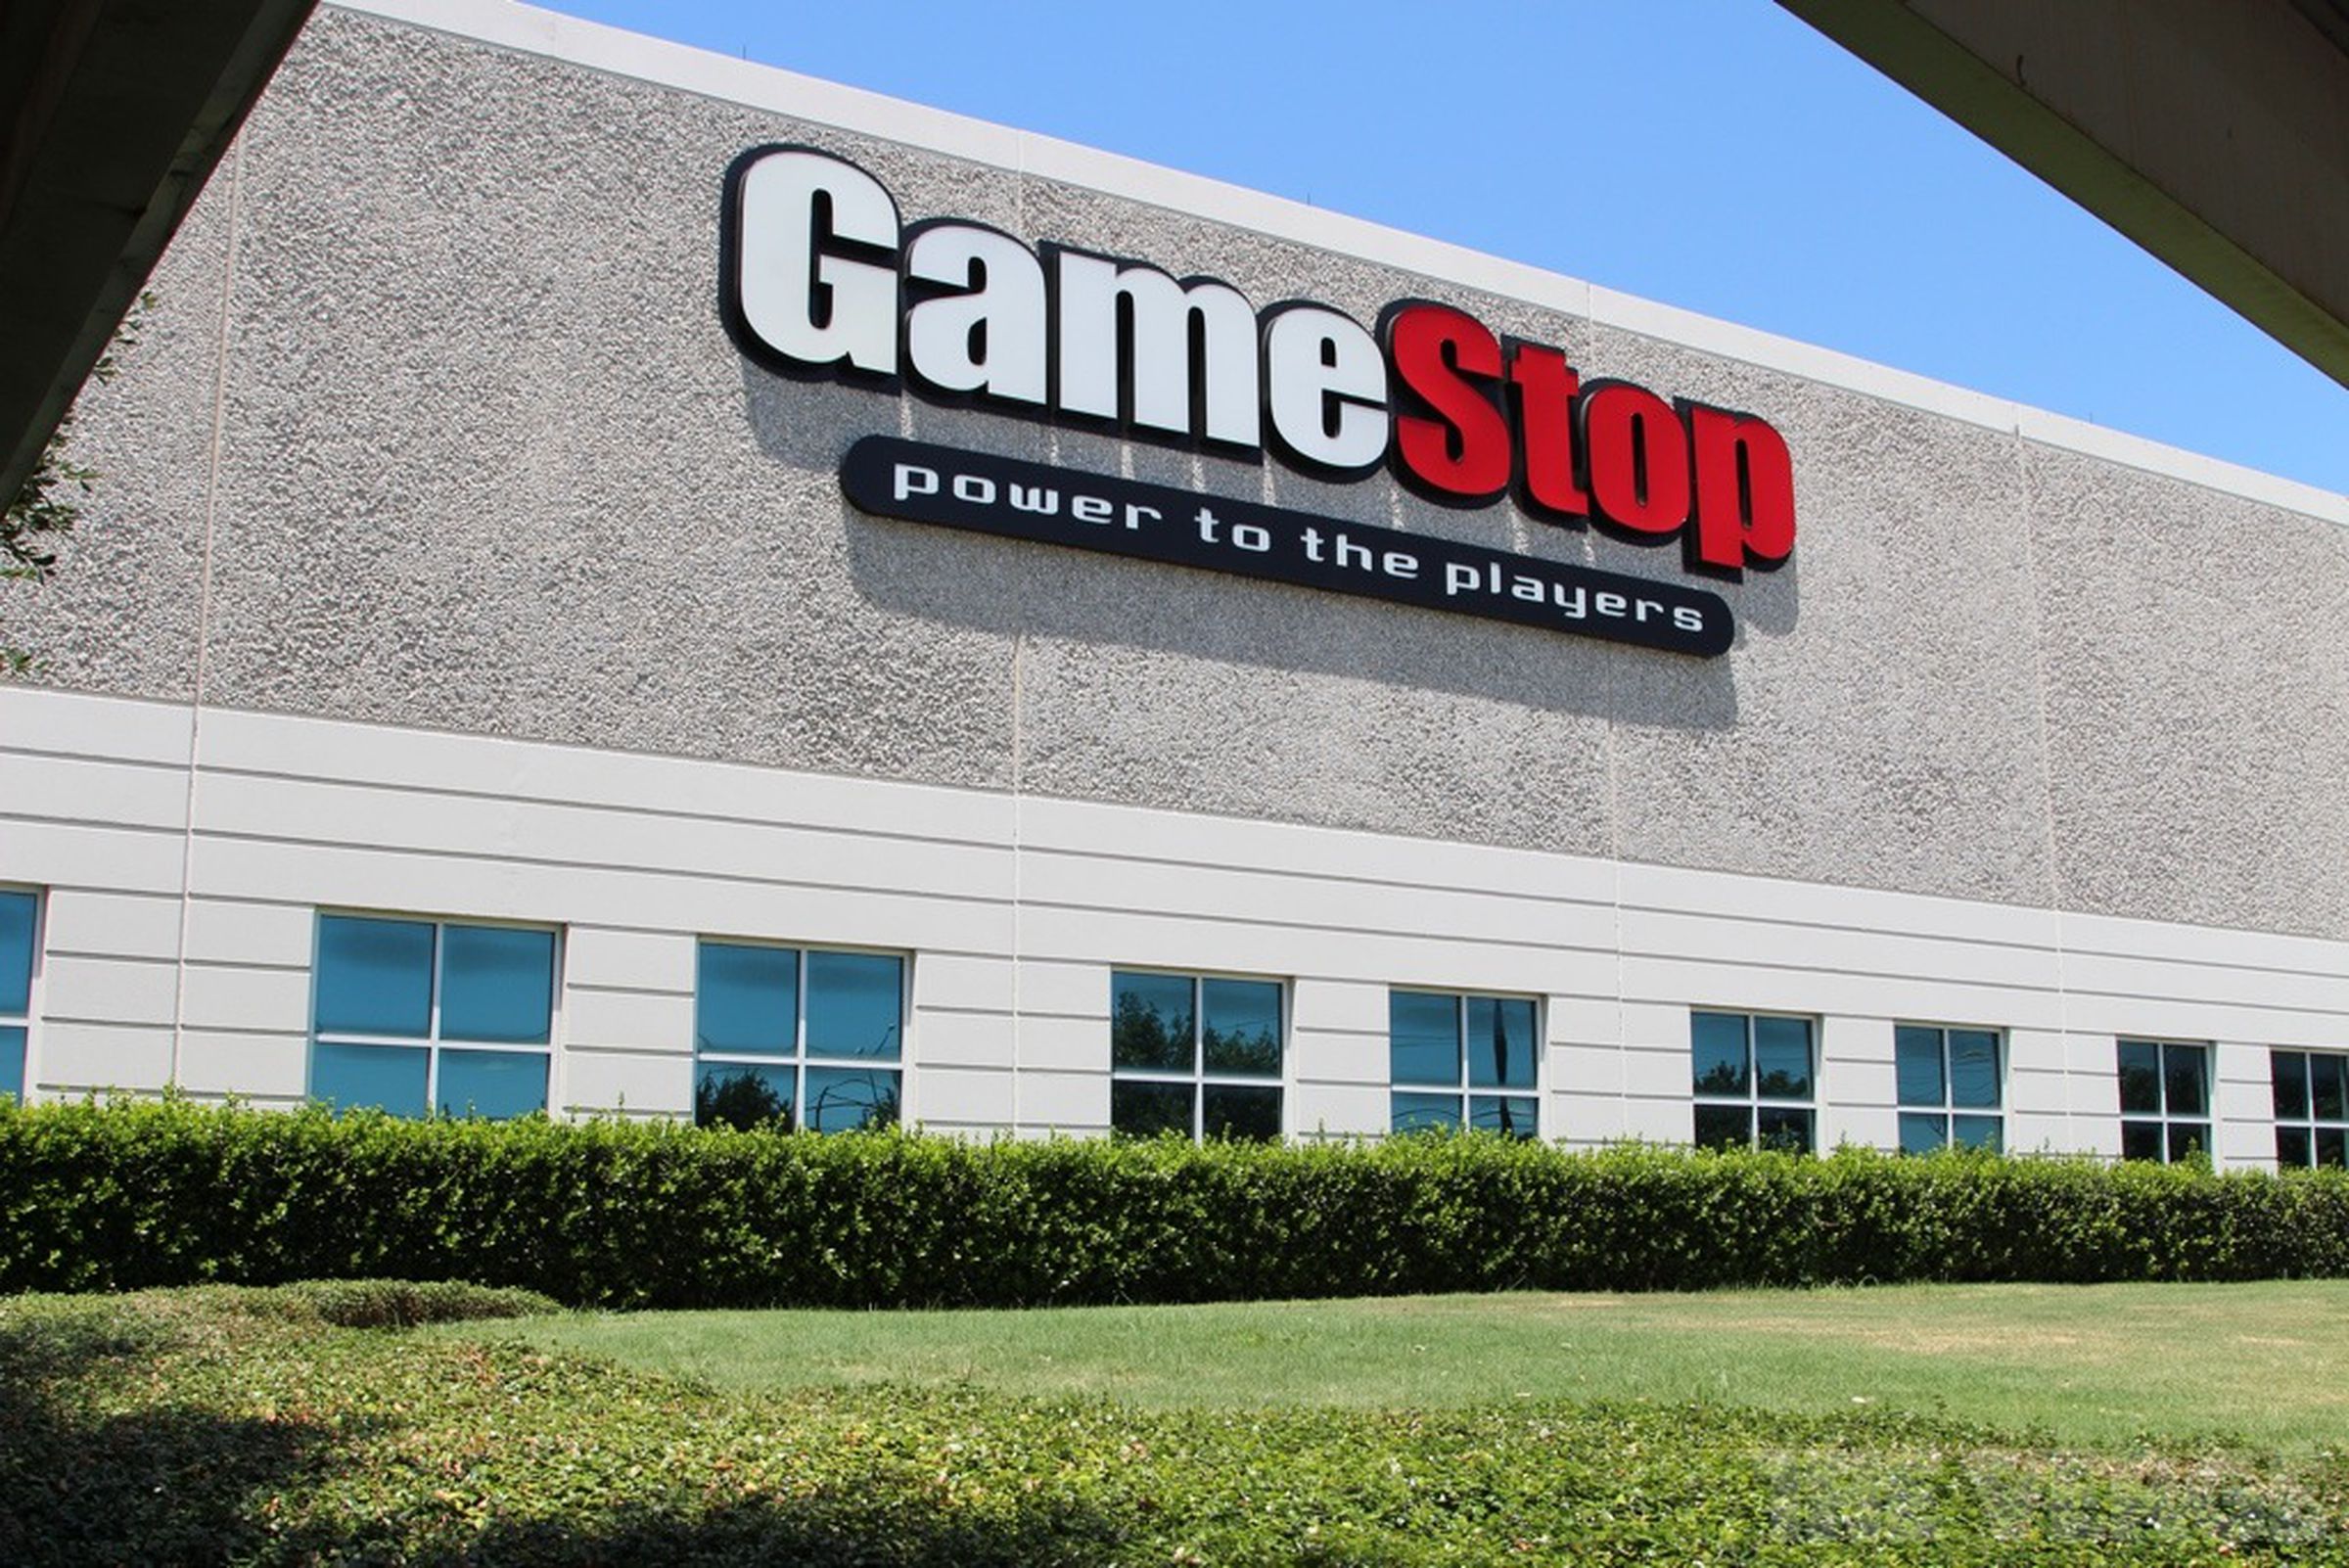 GameStop Refurbishment Operations Center tour pictures